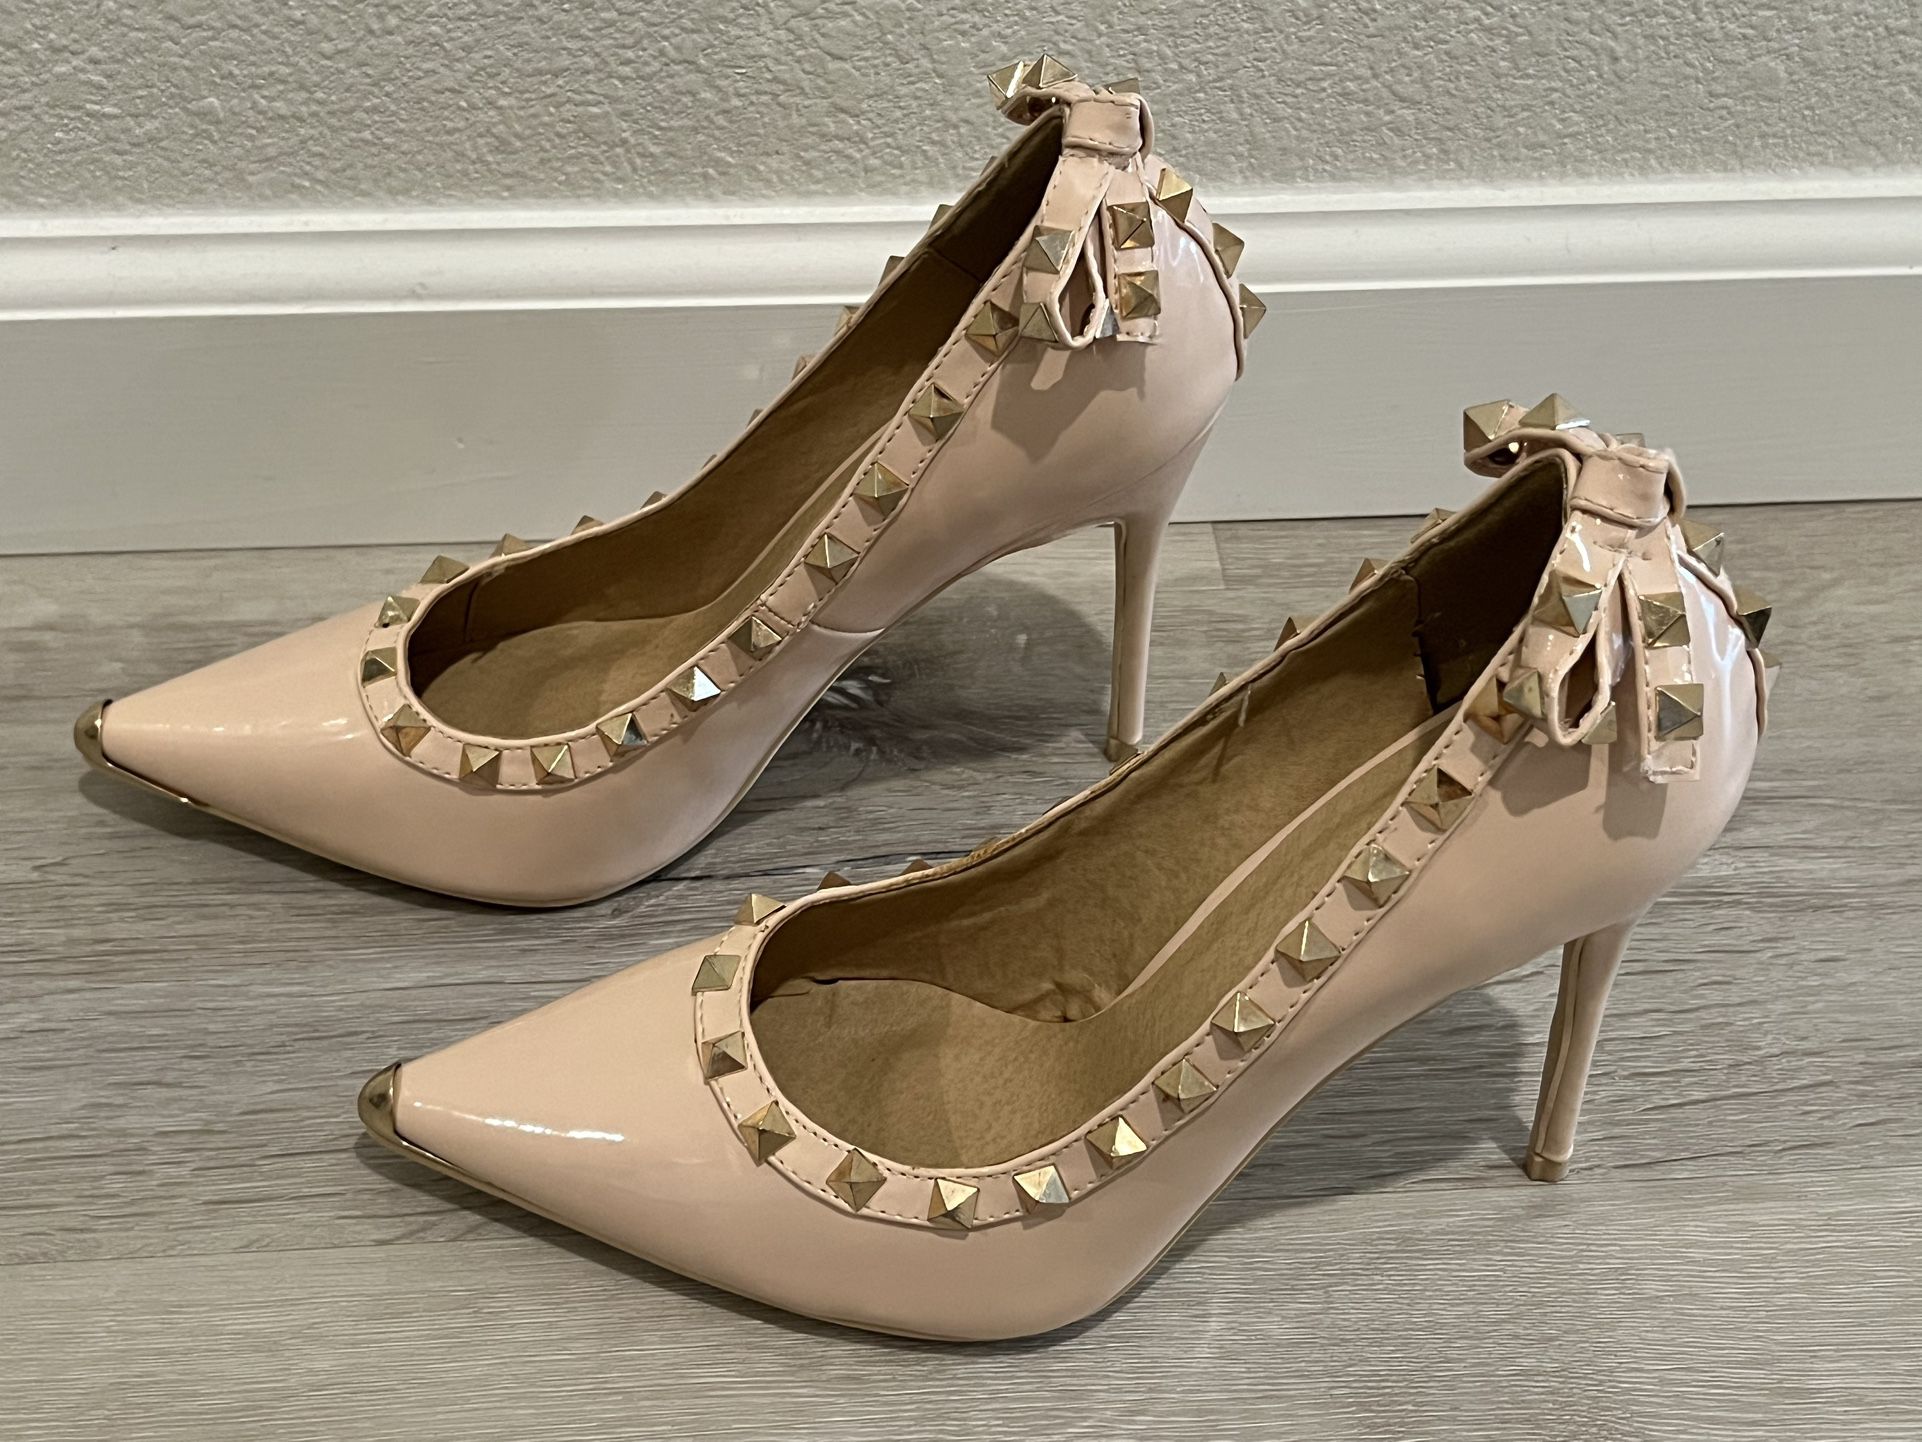 Studded High Heel/Women Shoes Size 8